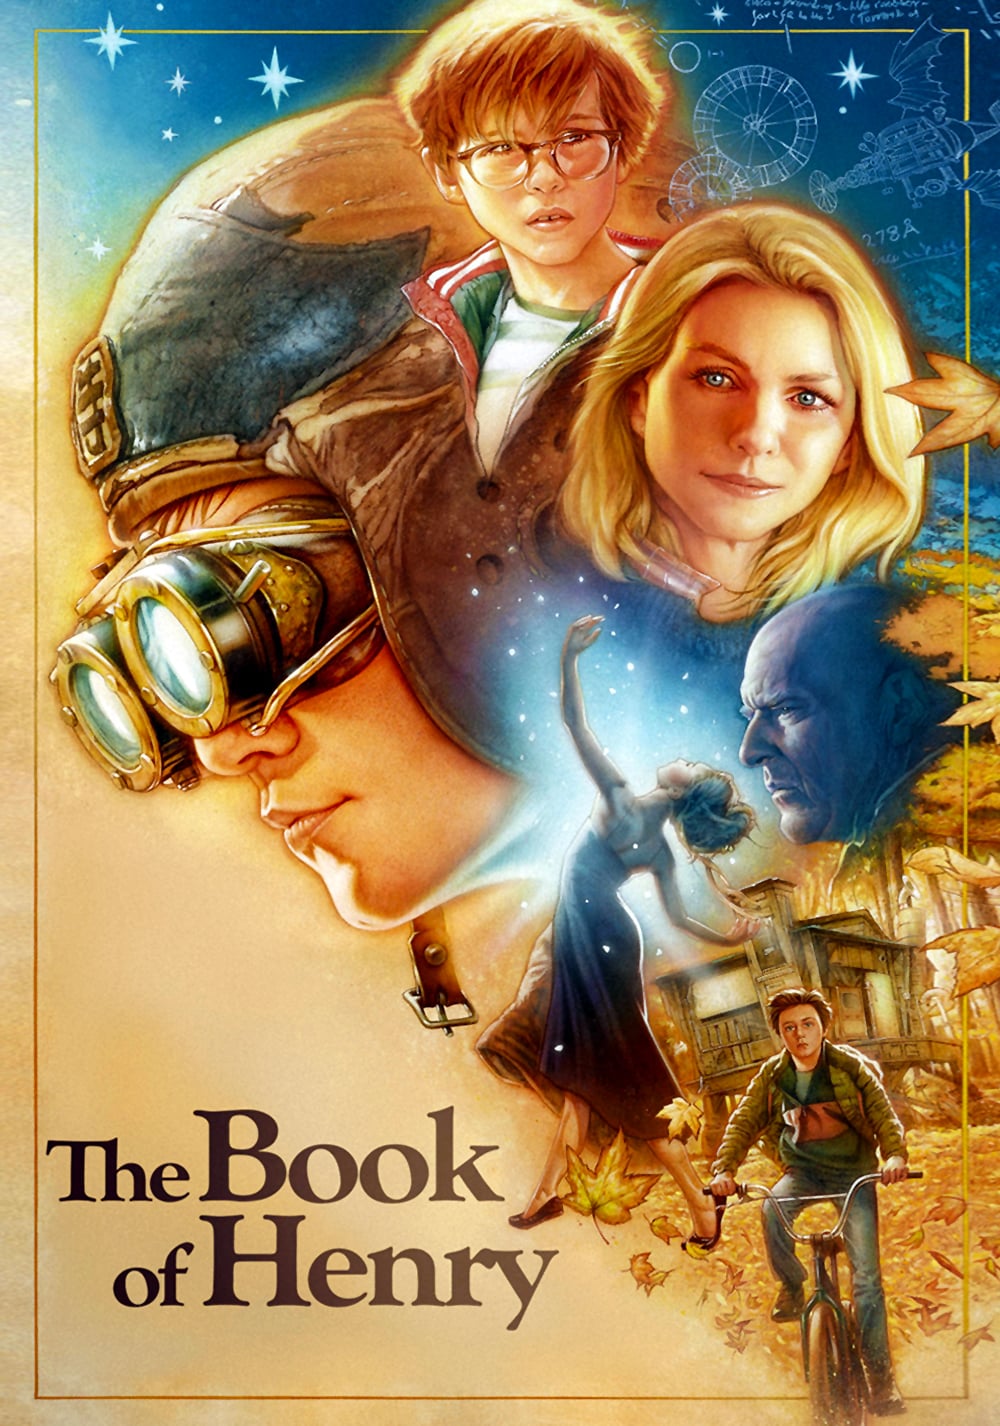 Plakat von "The Book of Henry"